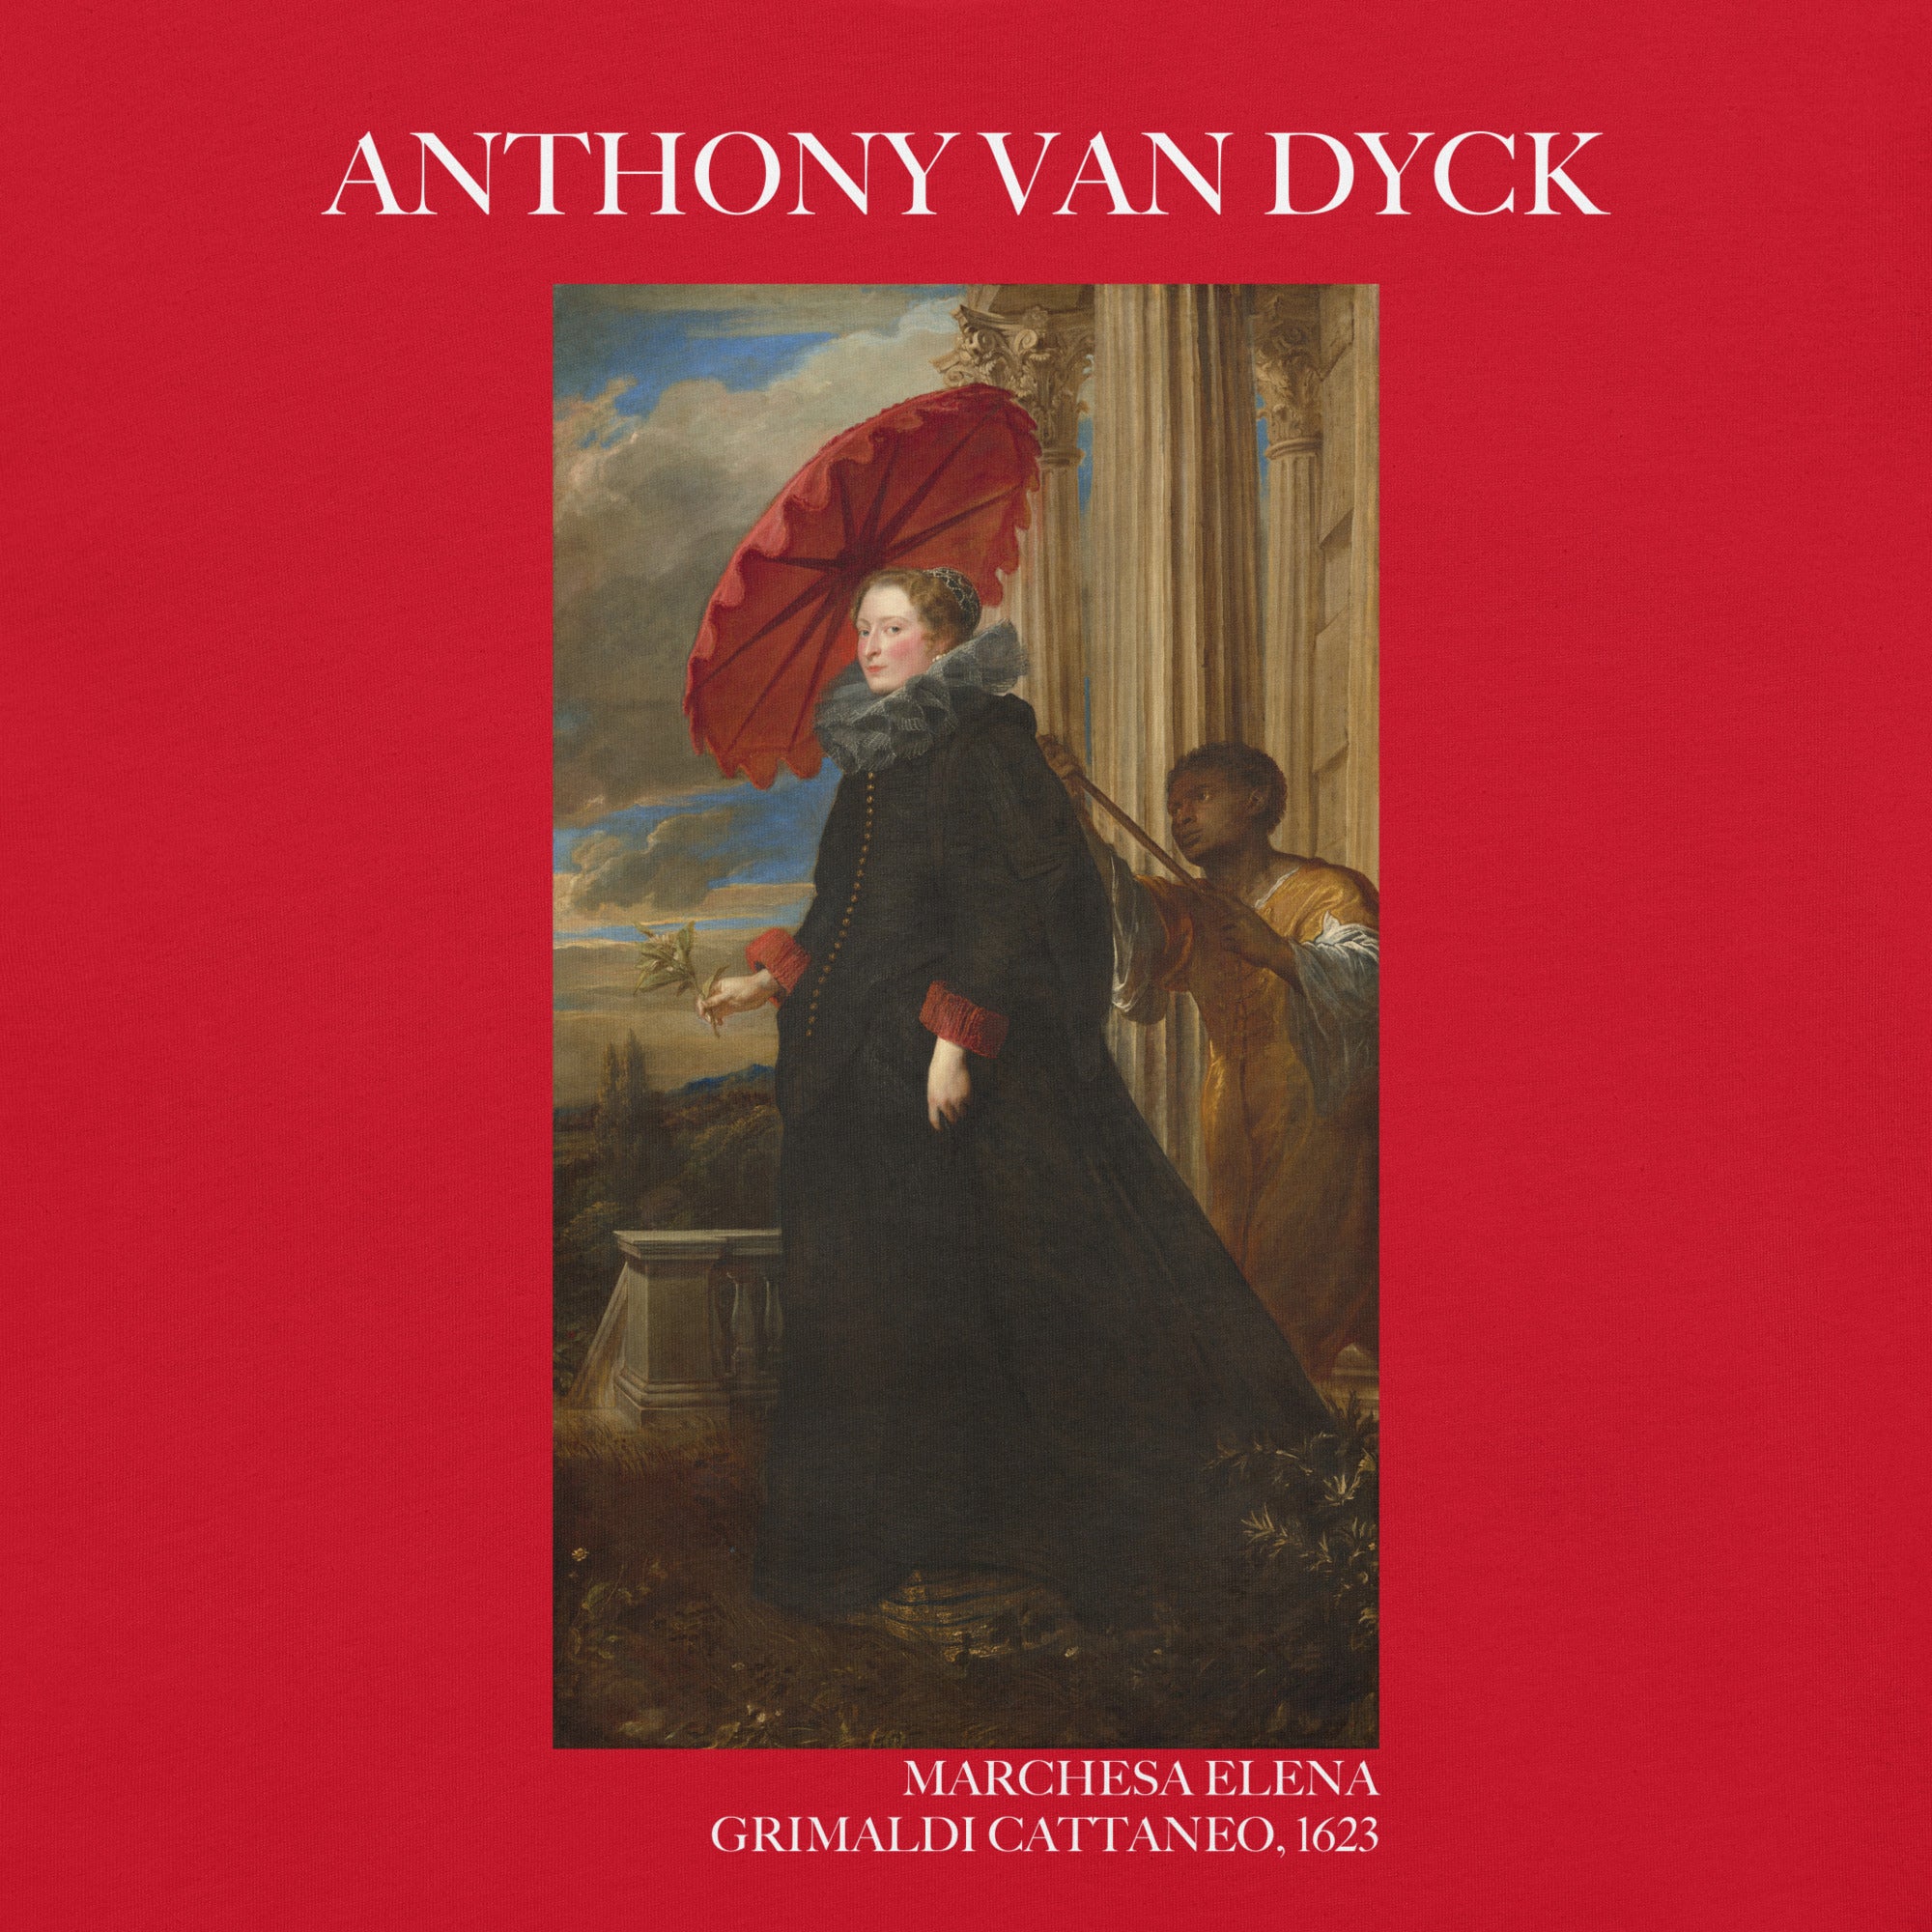 Sir Anthony van Dyck 'Marchesa Elena Grimaldi Cattaneo' Famous Painting T-Shirt | Unisex Classic Art Tee